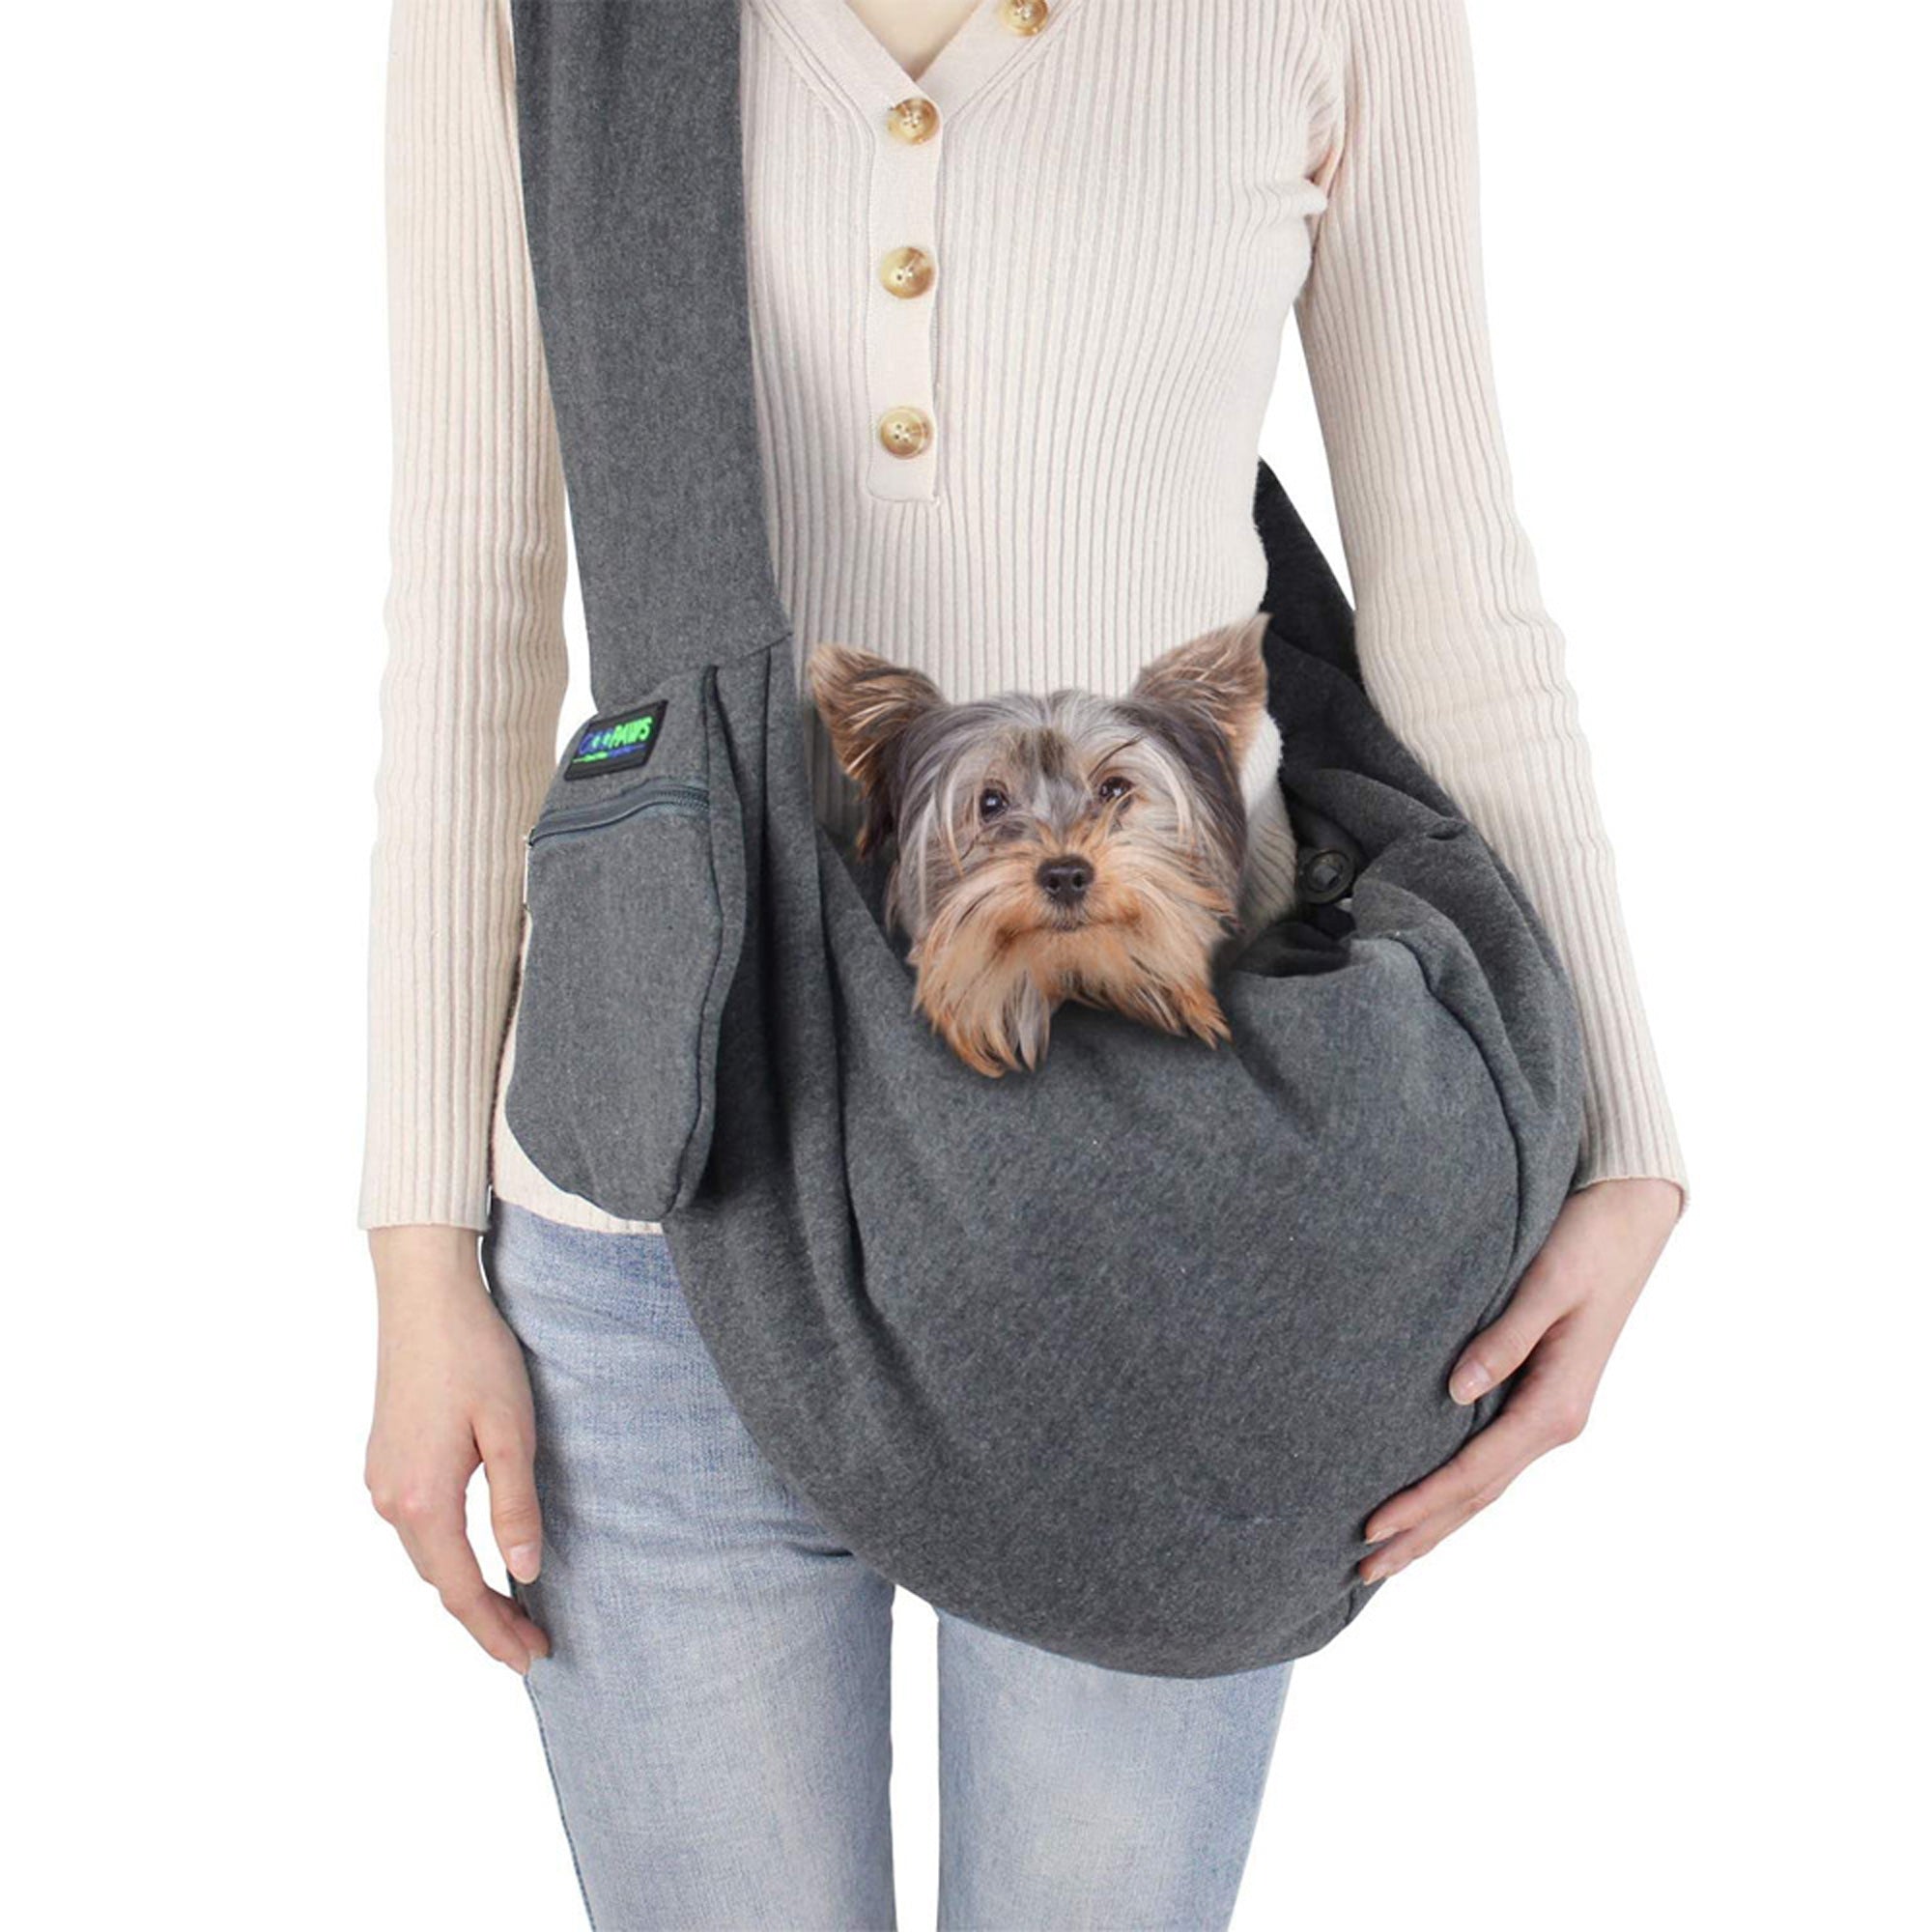 GOOPAWS Hand Free Comfy Pet Sling Bag for Small Dog Cat, Smoke Gray